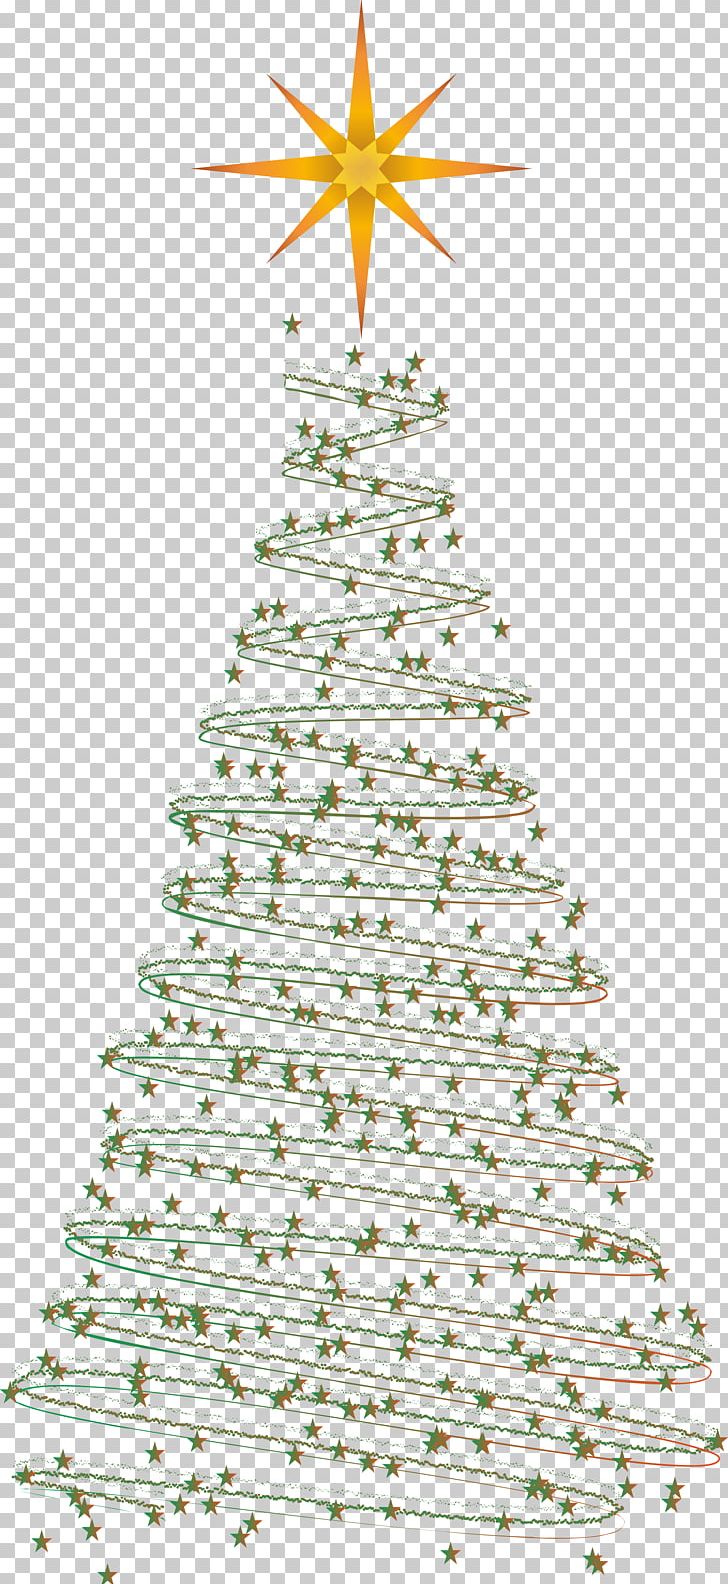 Christmas Tree Fir Christmas Decoration PNG, Clipart, Branch, Celebrities, Chris Pine, Christmas, Christmas Decoration Free PNG Download